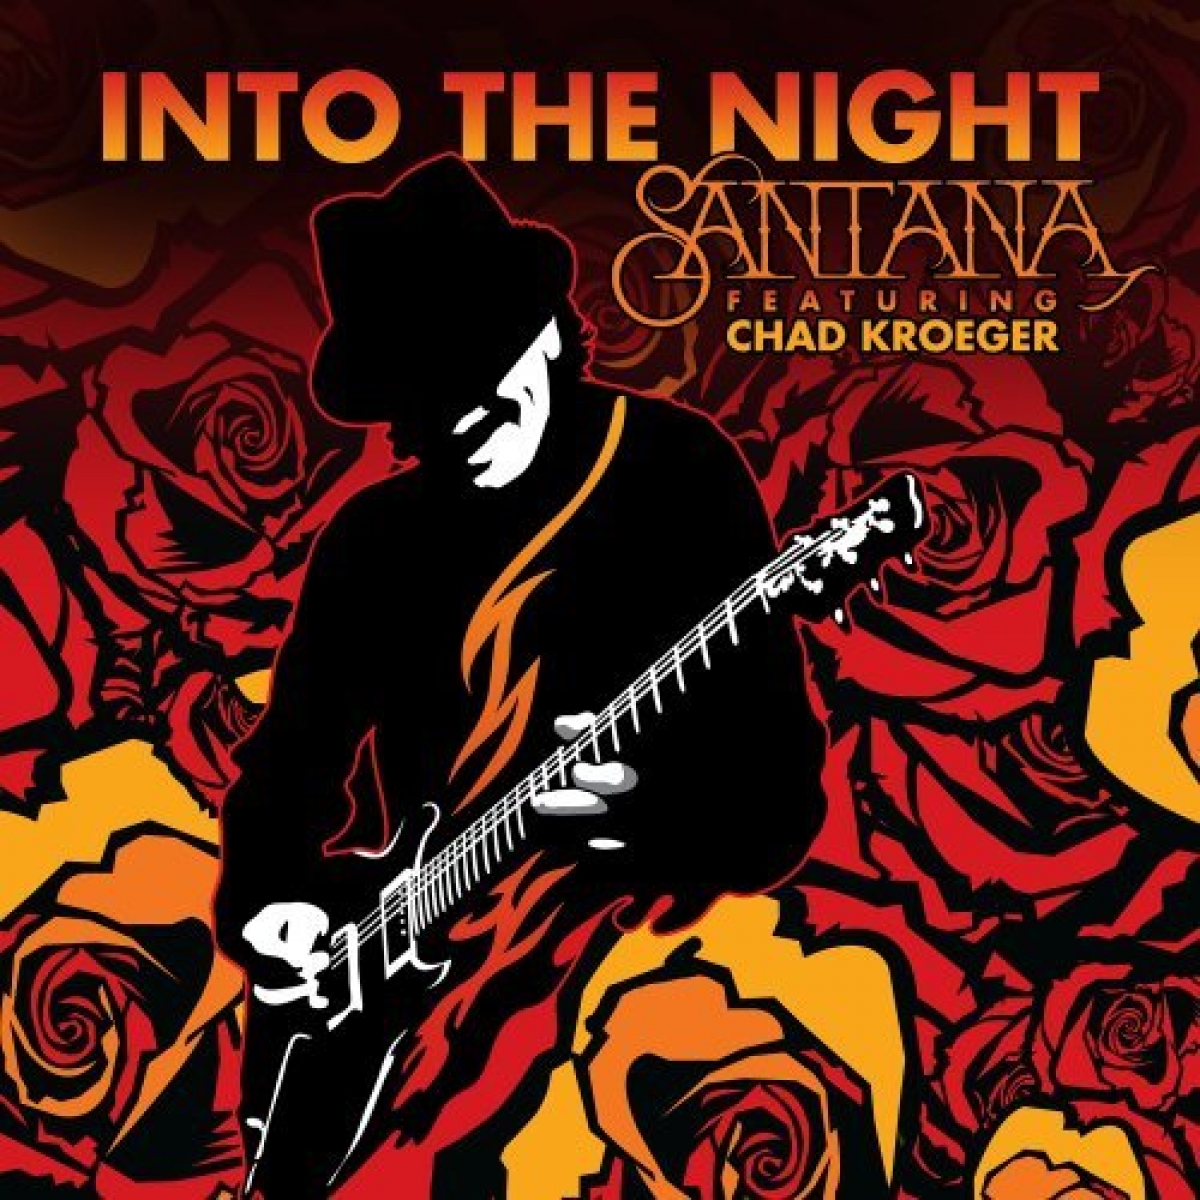 SANTANA - Into The Night (feat. Chad Kroeger)